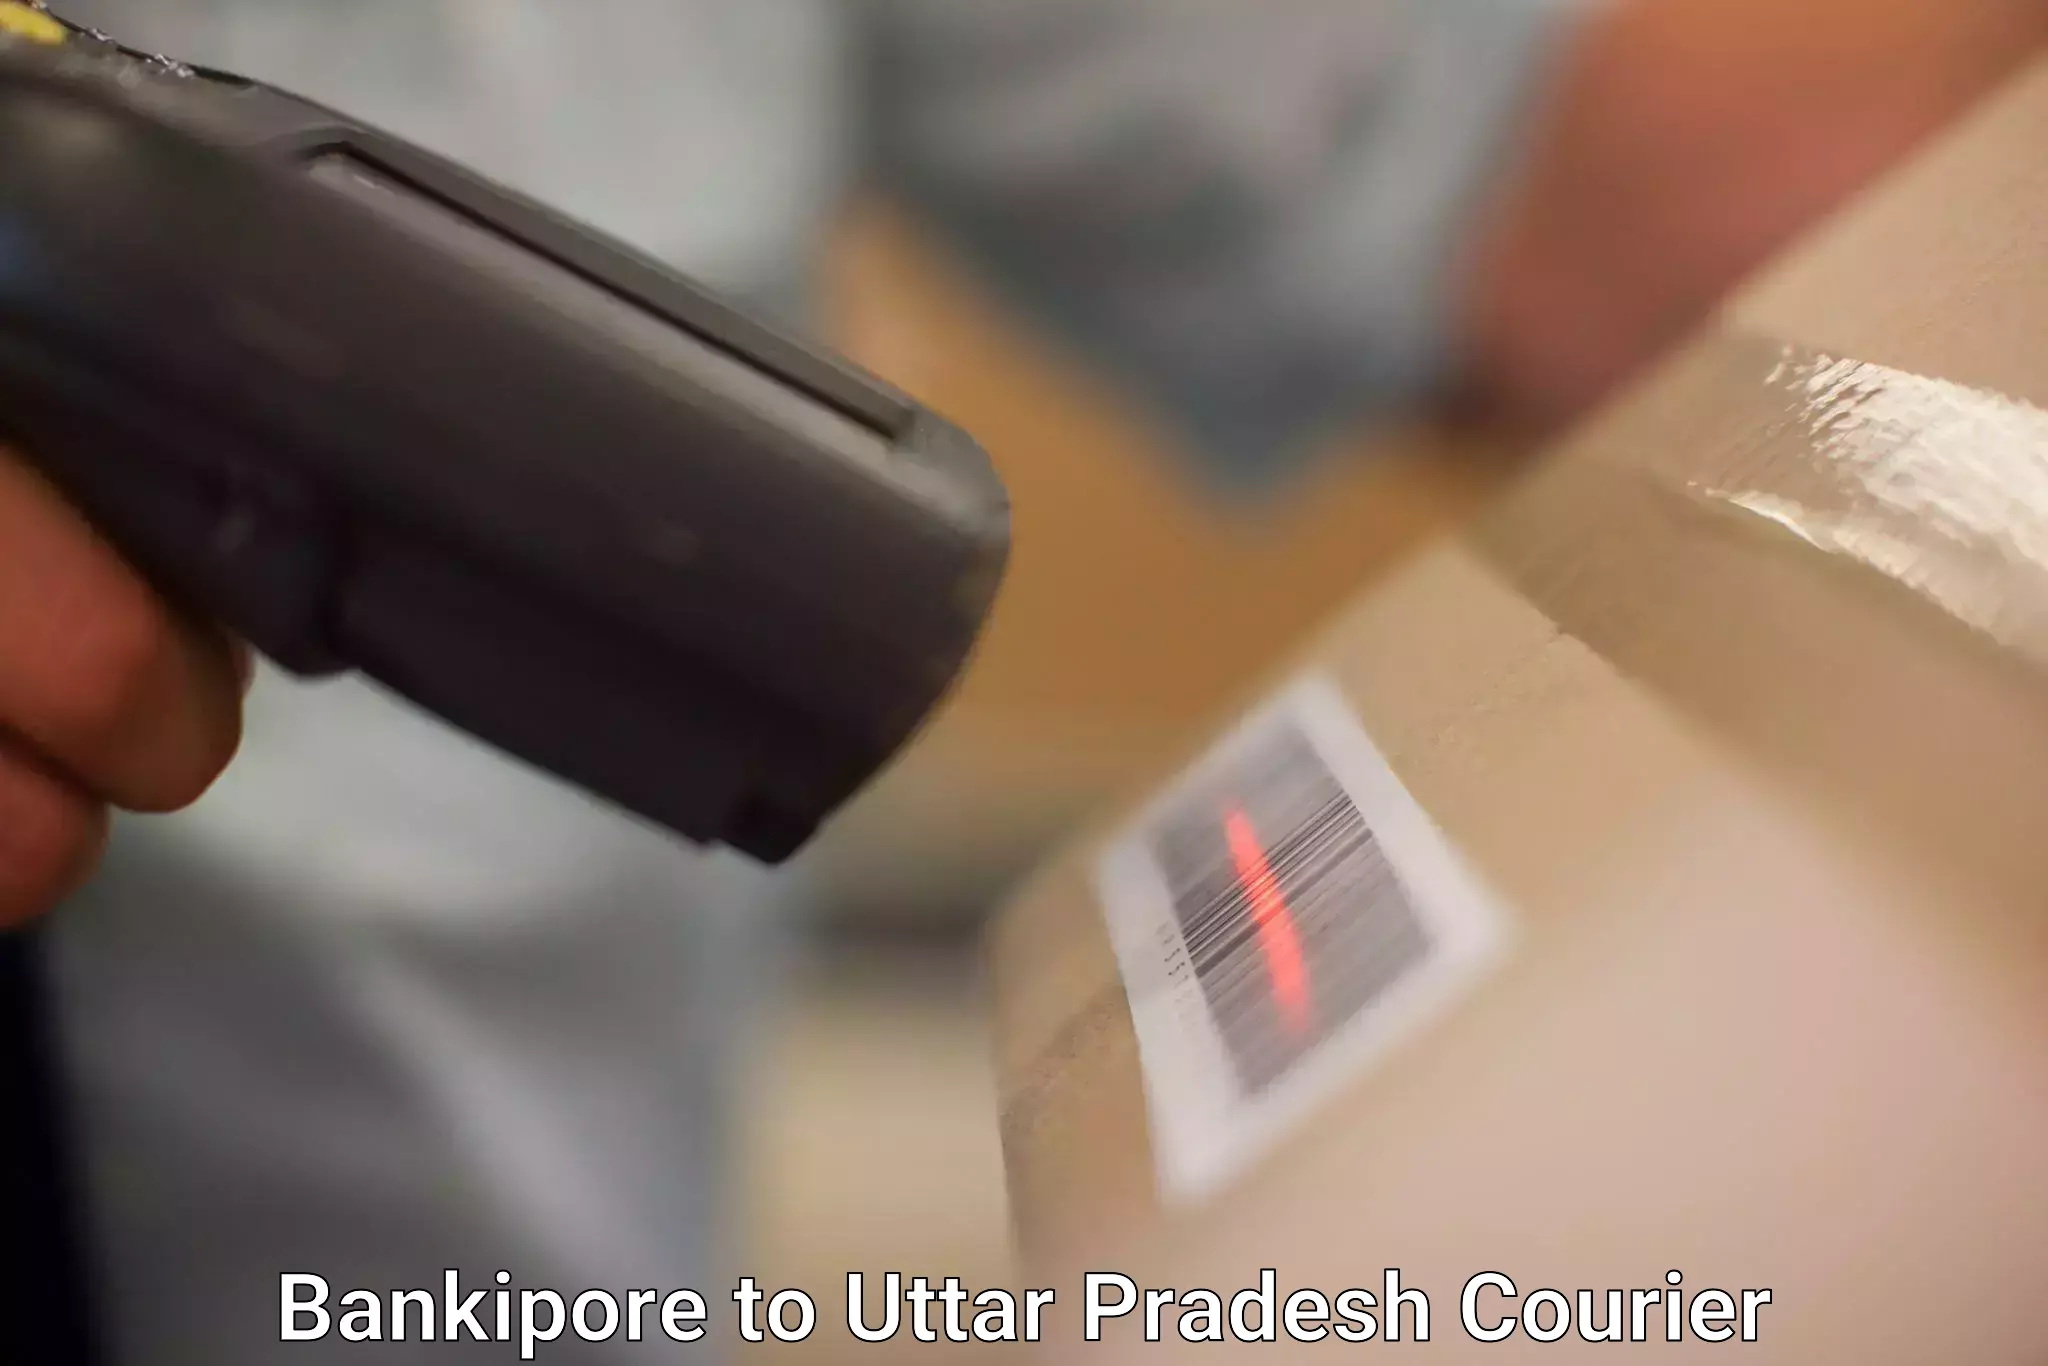 Flexible parcel services in Bankipore to Ambuj Nagar